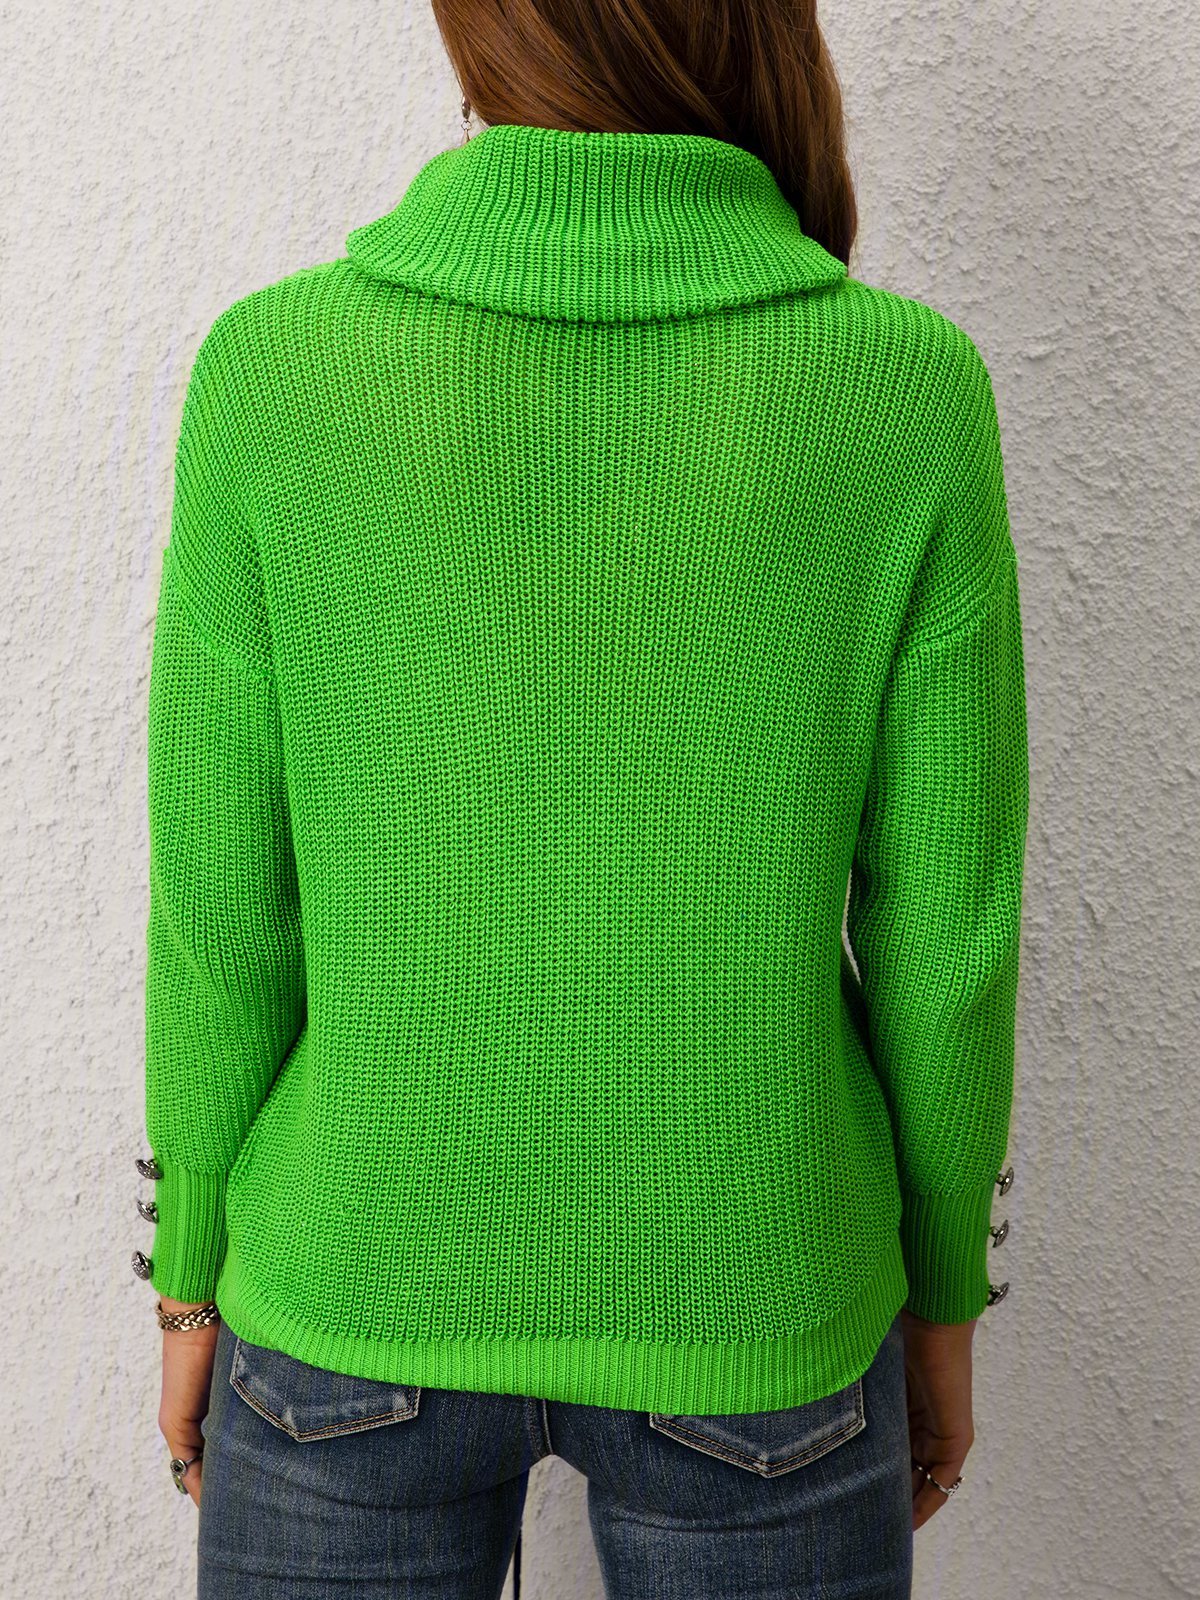 Plus Size Long Sleeve Plain Casual Sweater